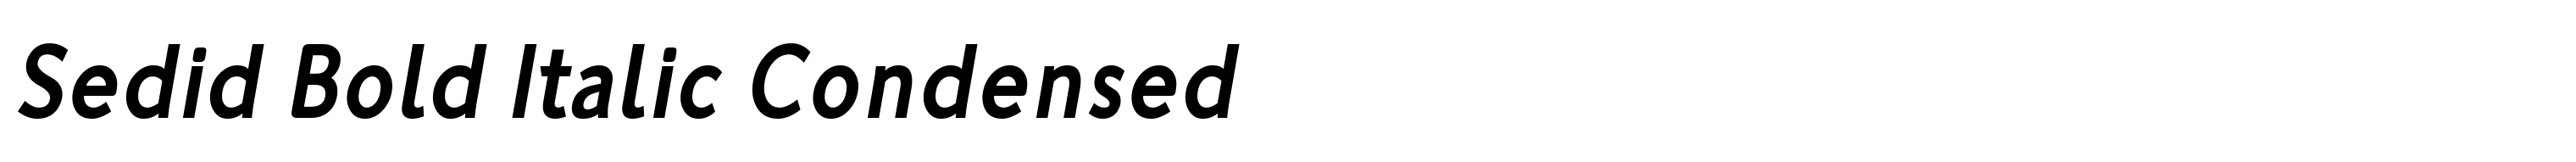 Sedid Bold Italic Condensed